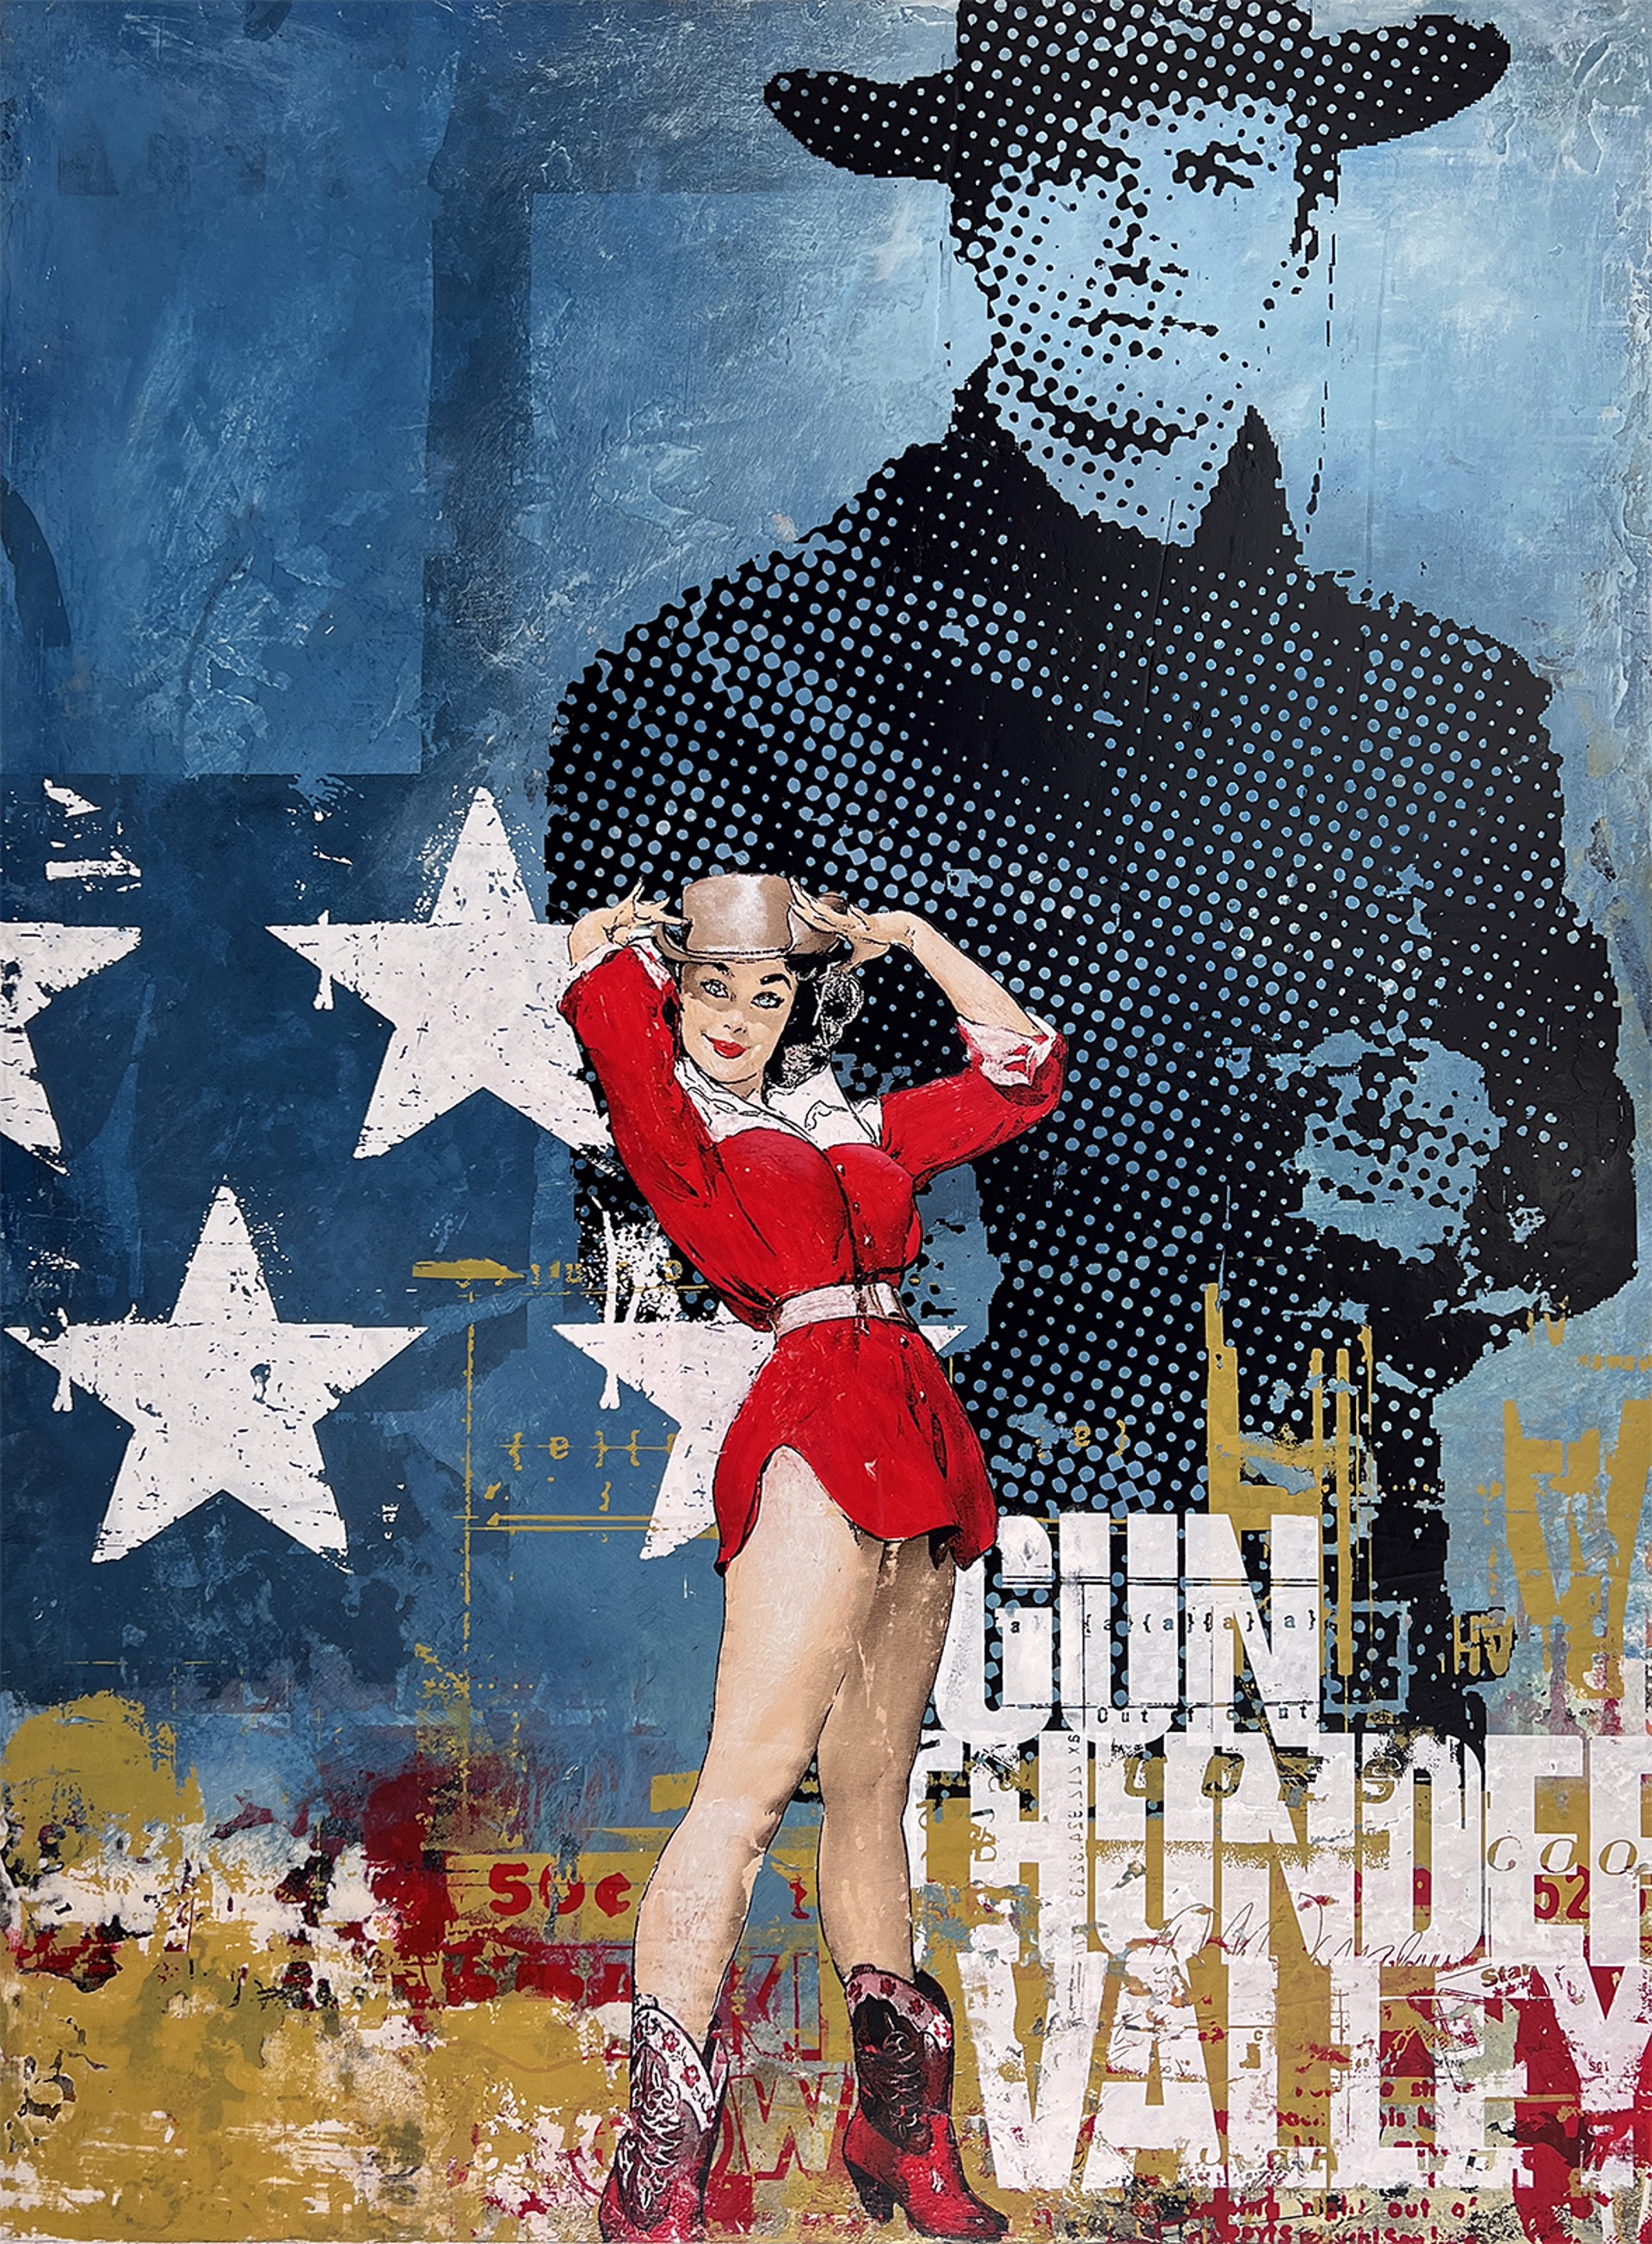 Gun Thunder by Ray Phillips